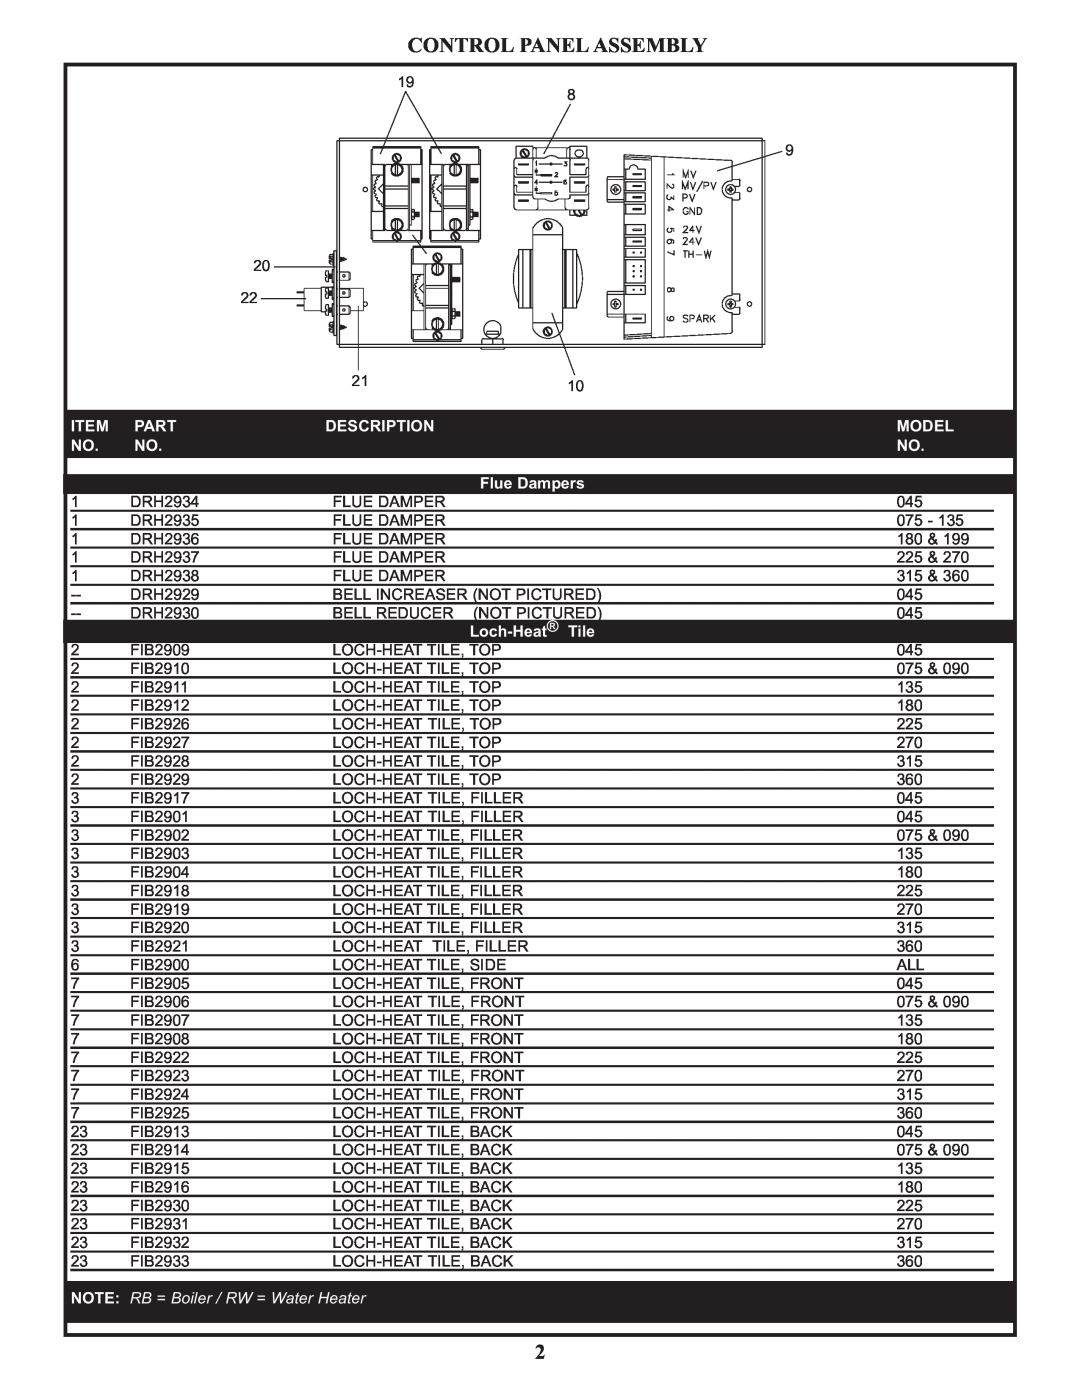 Lochinvar RW 090-360 manual Control Panel Assembly, Part, Description, Model, Flue Dampers, Loch-Heat Tile 